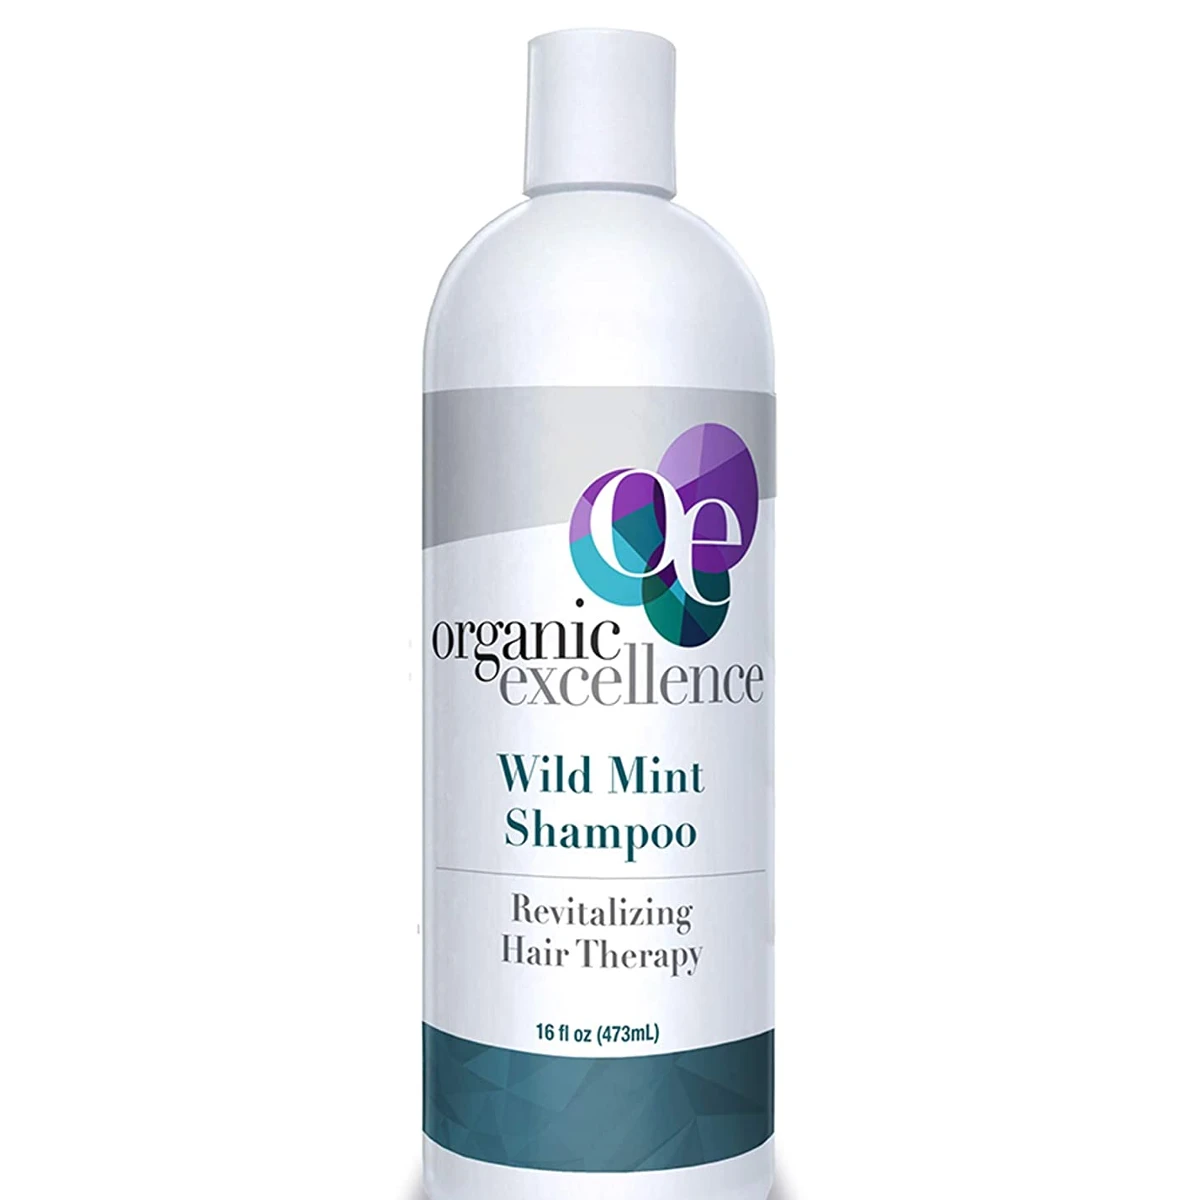 Organic Excellence Wild Mint Shampoo